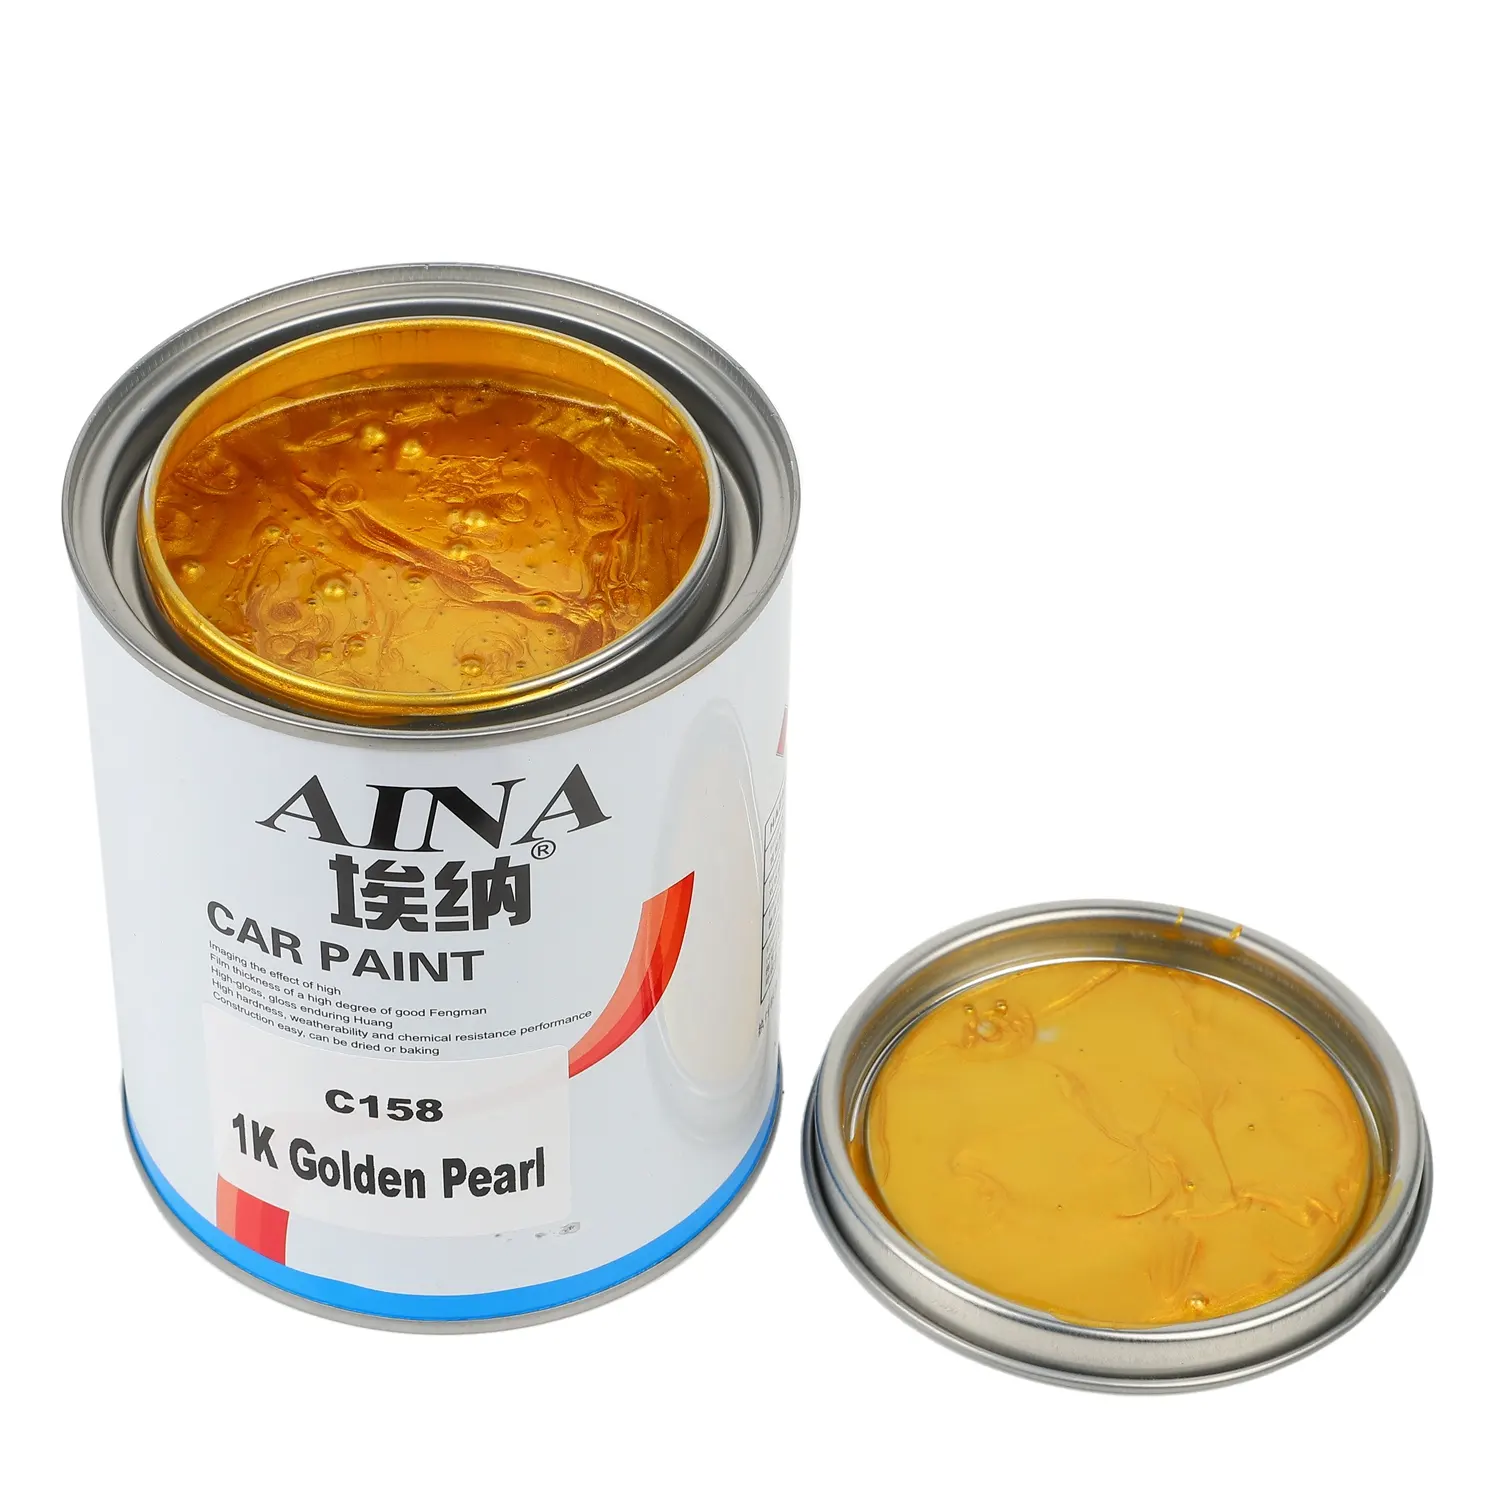 C158 High quality manufacturer Car paint 1k golden Pearl metal refinish Car paint